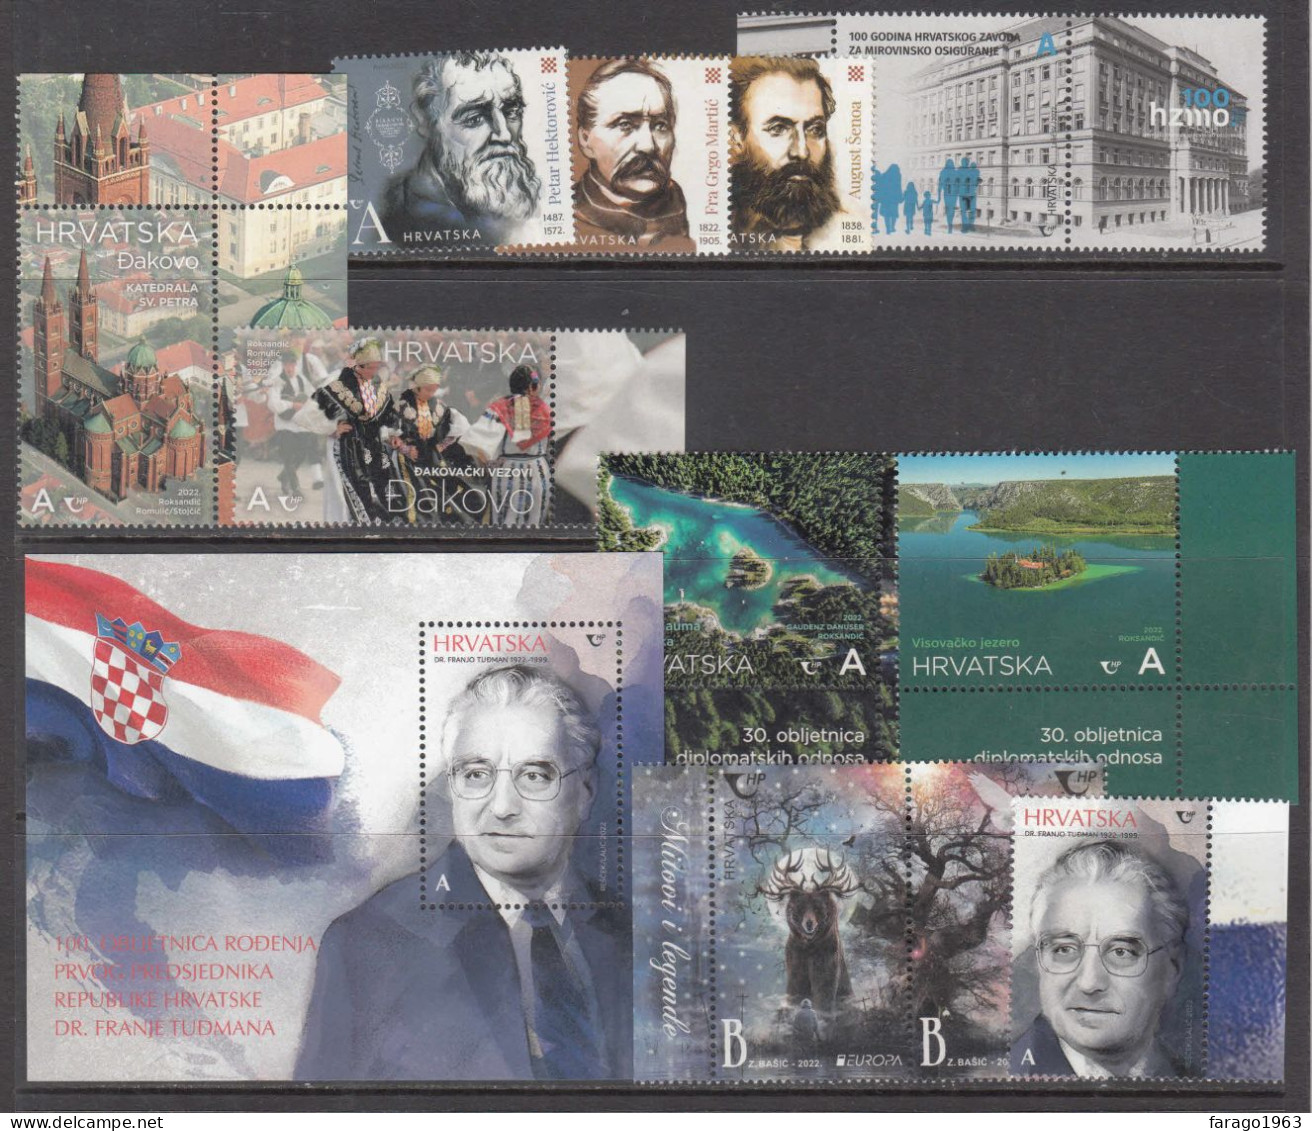 2022 Croatia Apr - Jun Issues 11 Stamps + 1 Sheet Well Below Face Value MNH - Kroatien